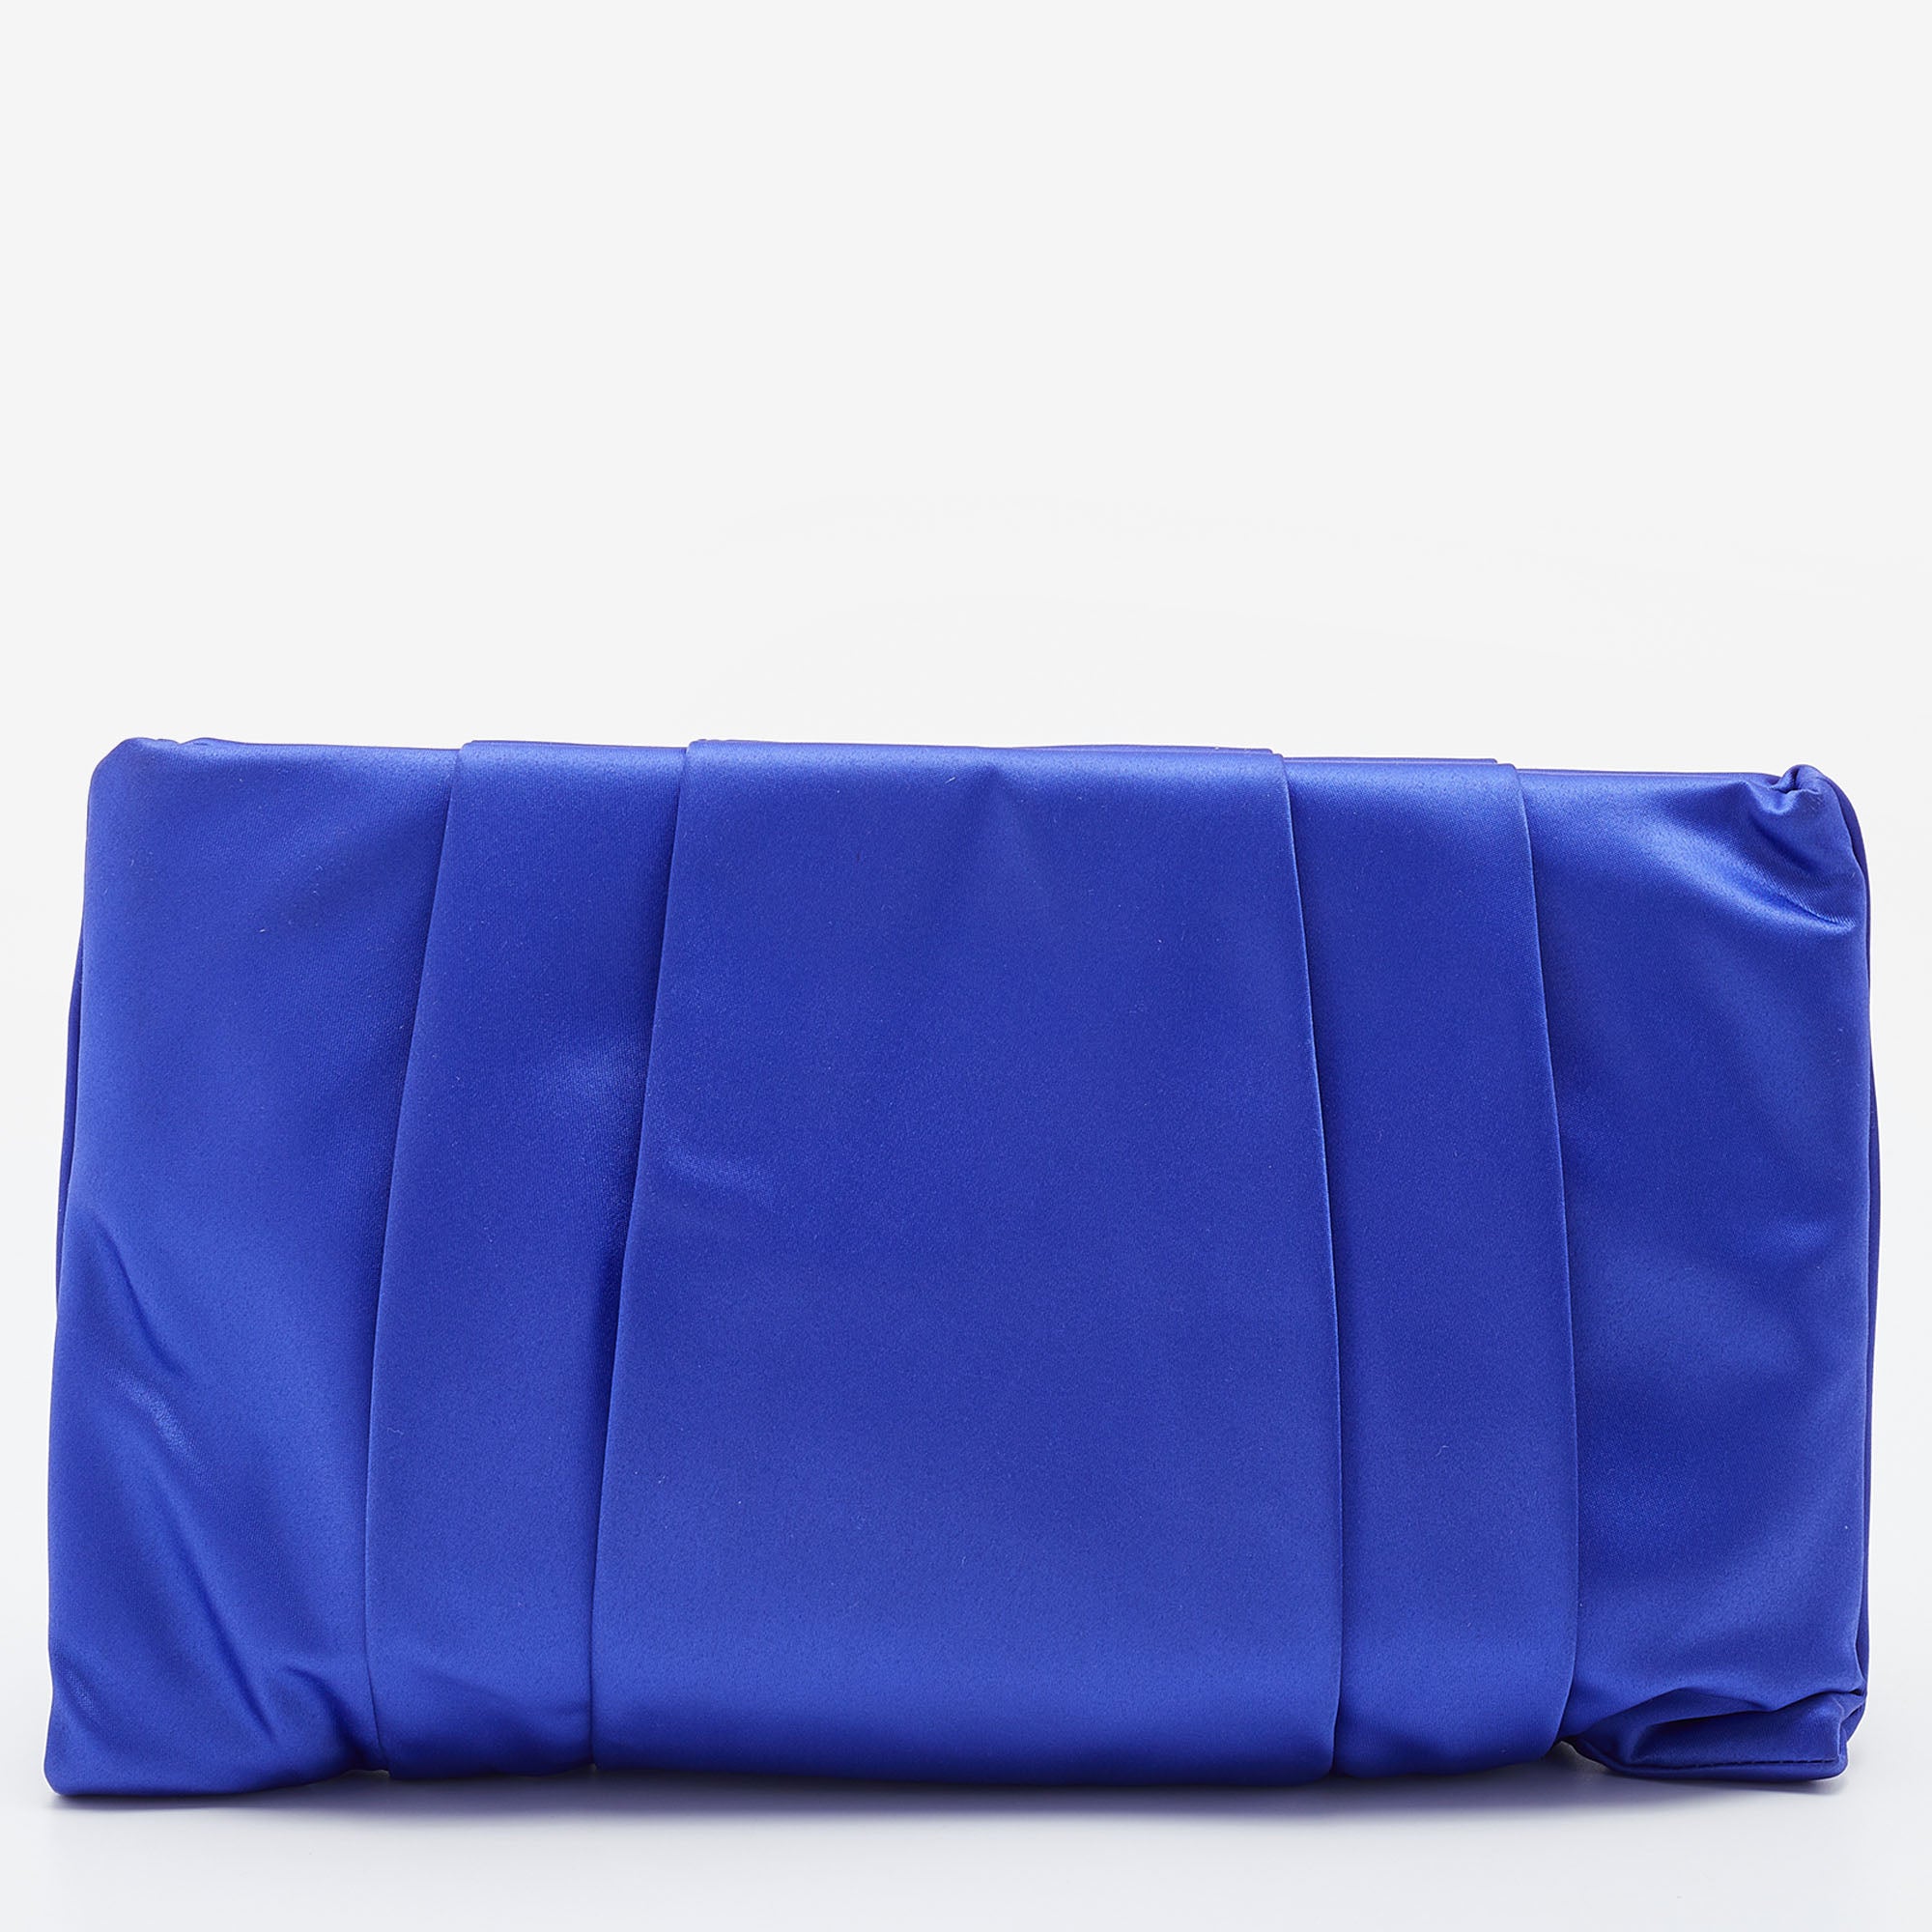 kate spade | Bags | Kate Spade Royal Blue Leather Handbag By Kate Spade  Purse | Poshmark